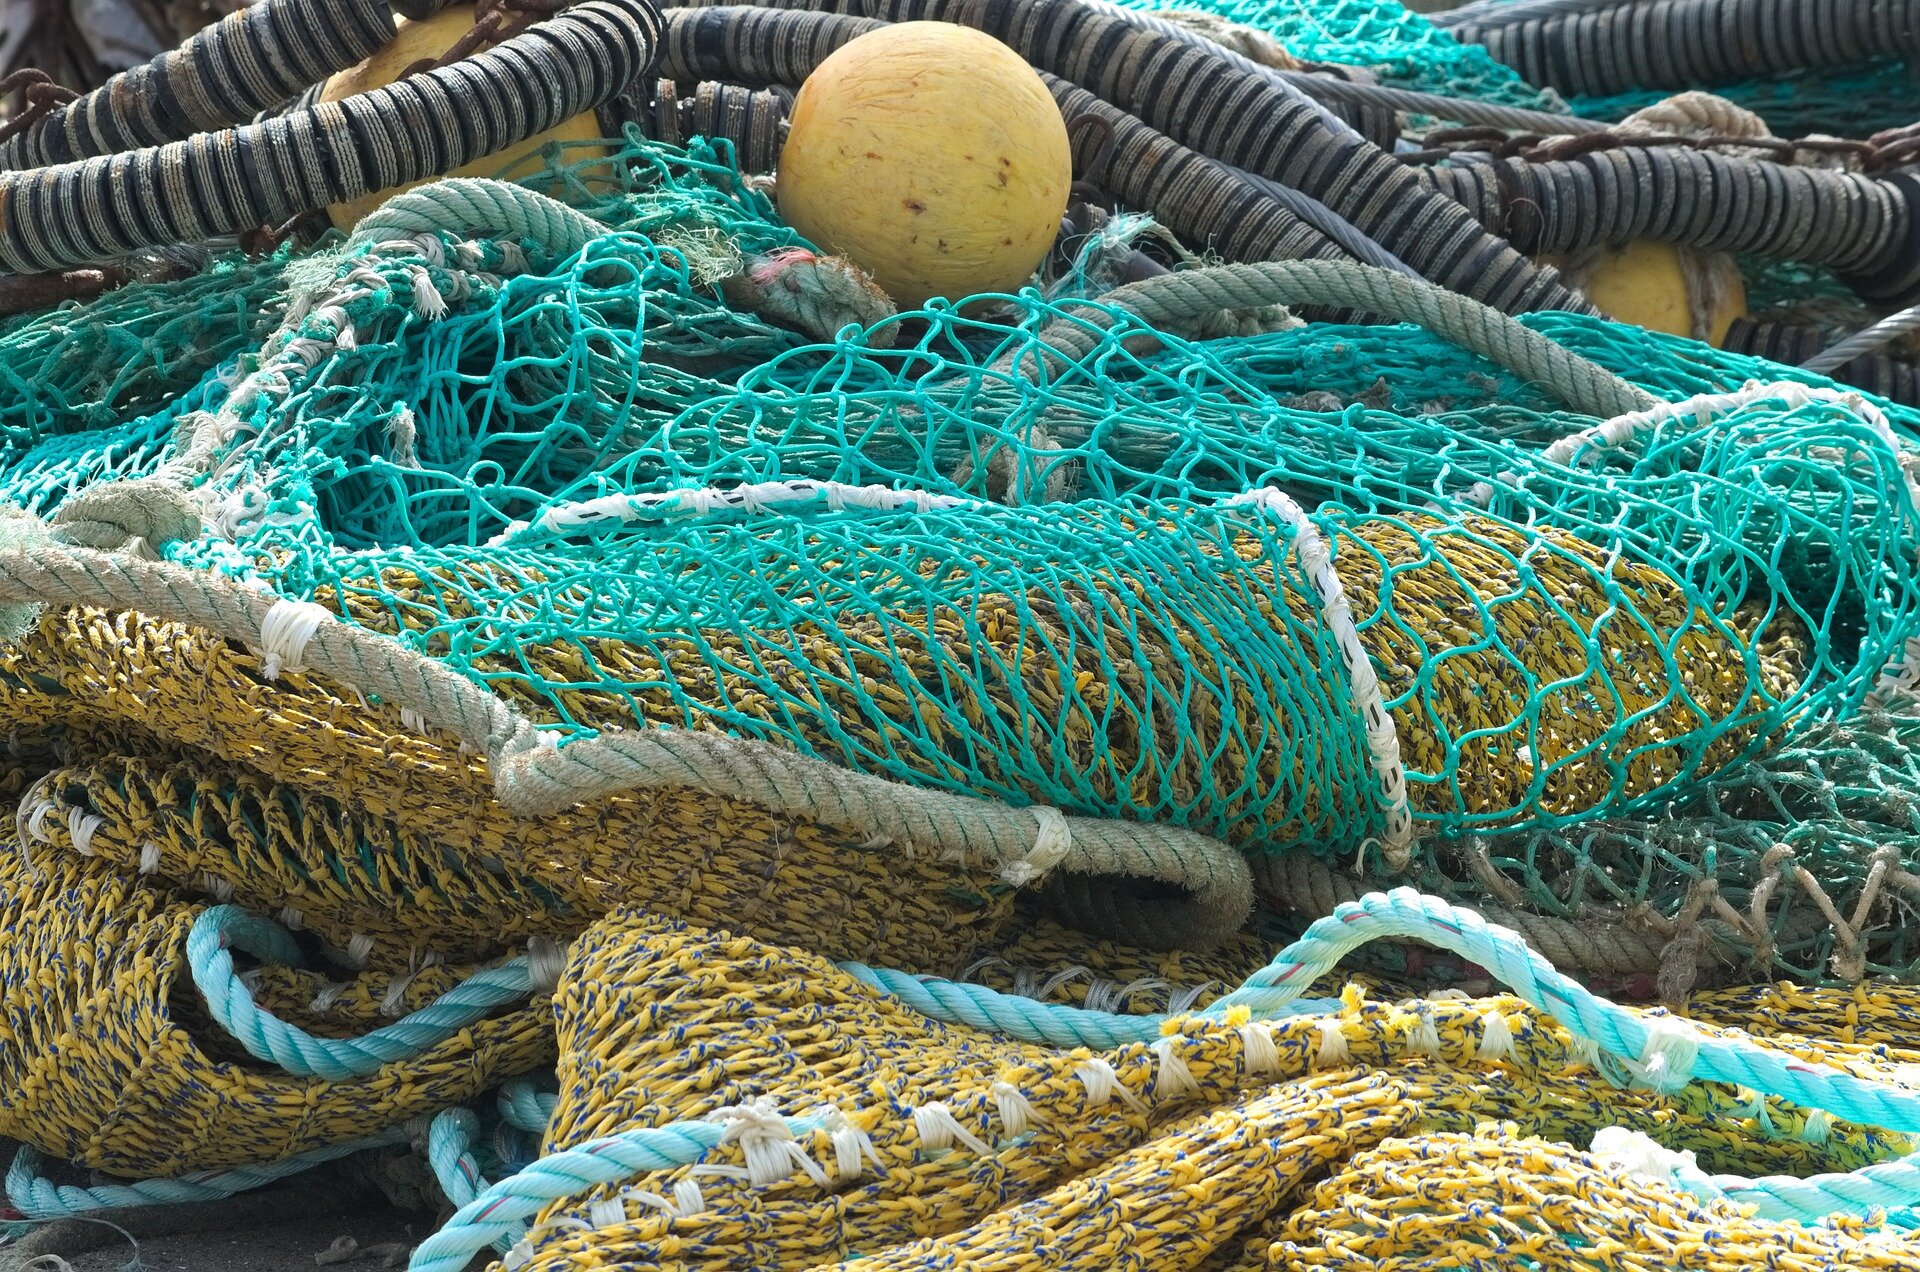 New framework developed to monitor the impact of ‘destructive’ fishing